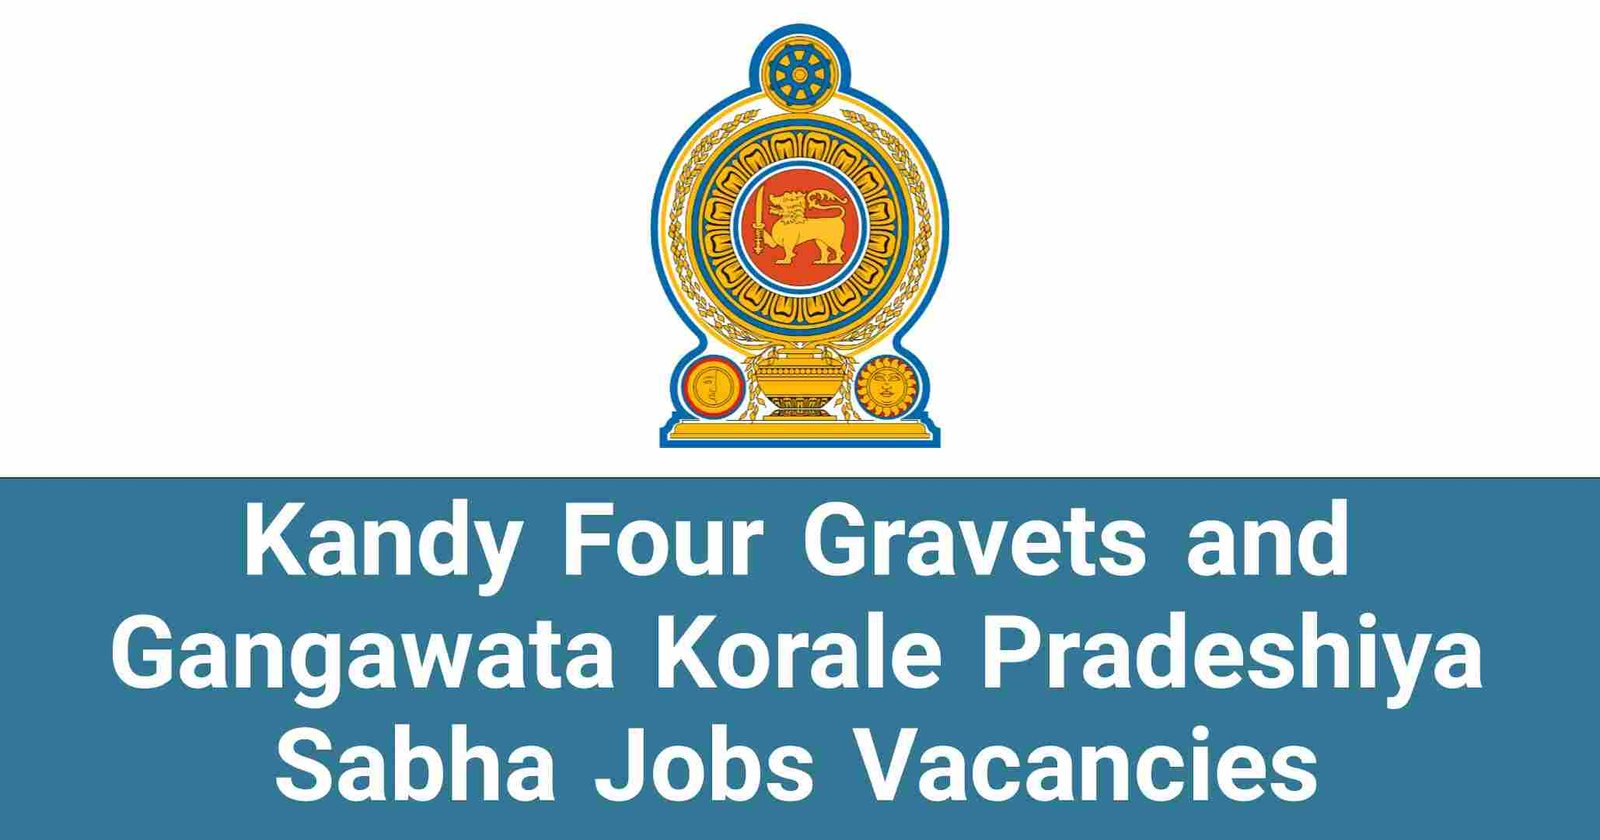 Kandy Four Gravets and Gangawata Korale Pradeshiya Sabha Jobs Vacancies